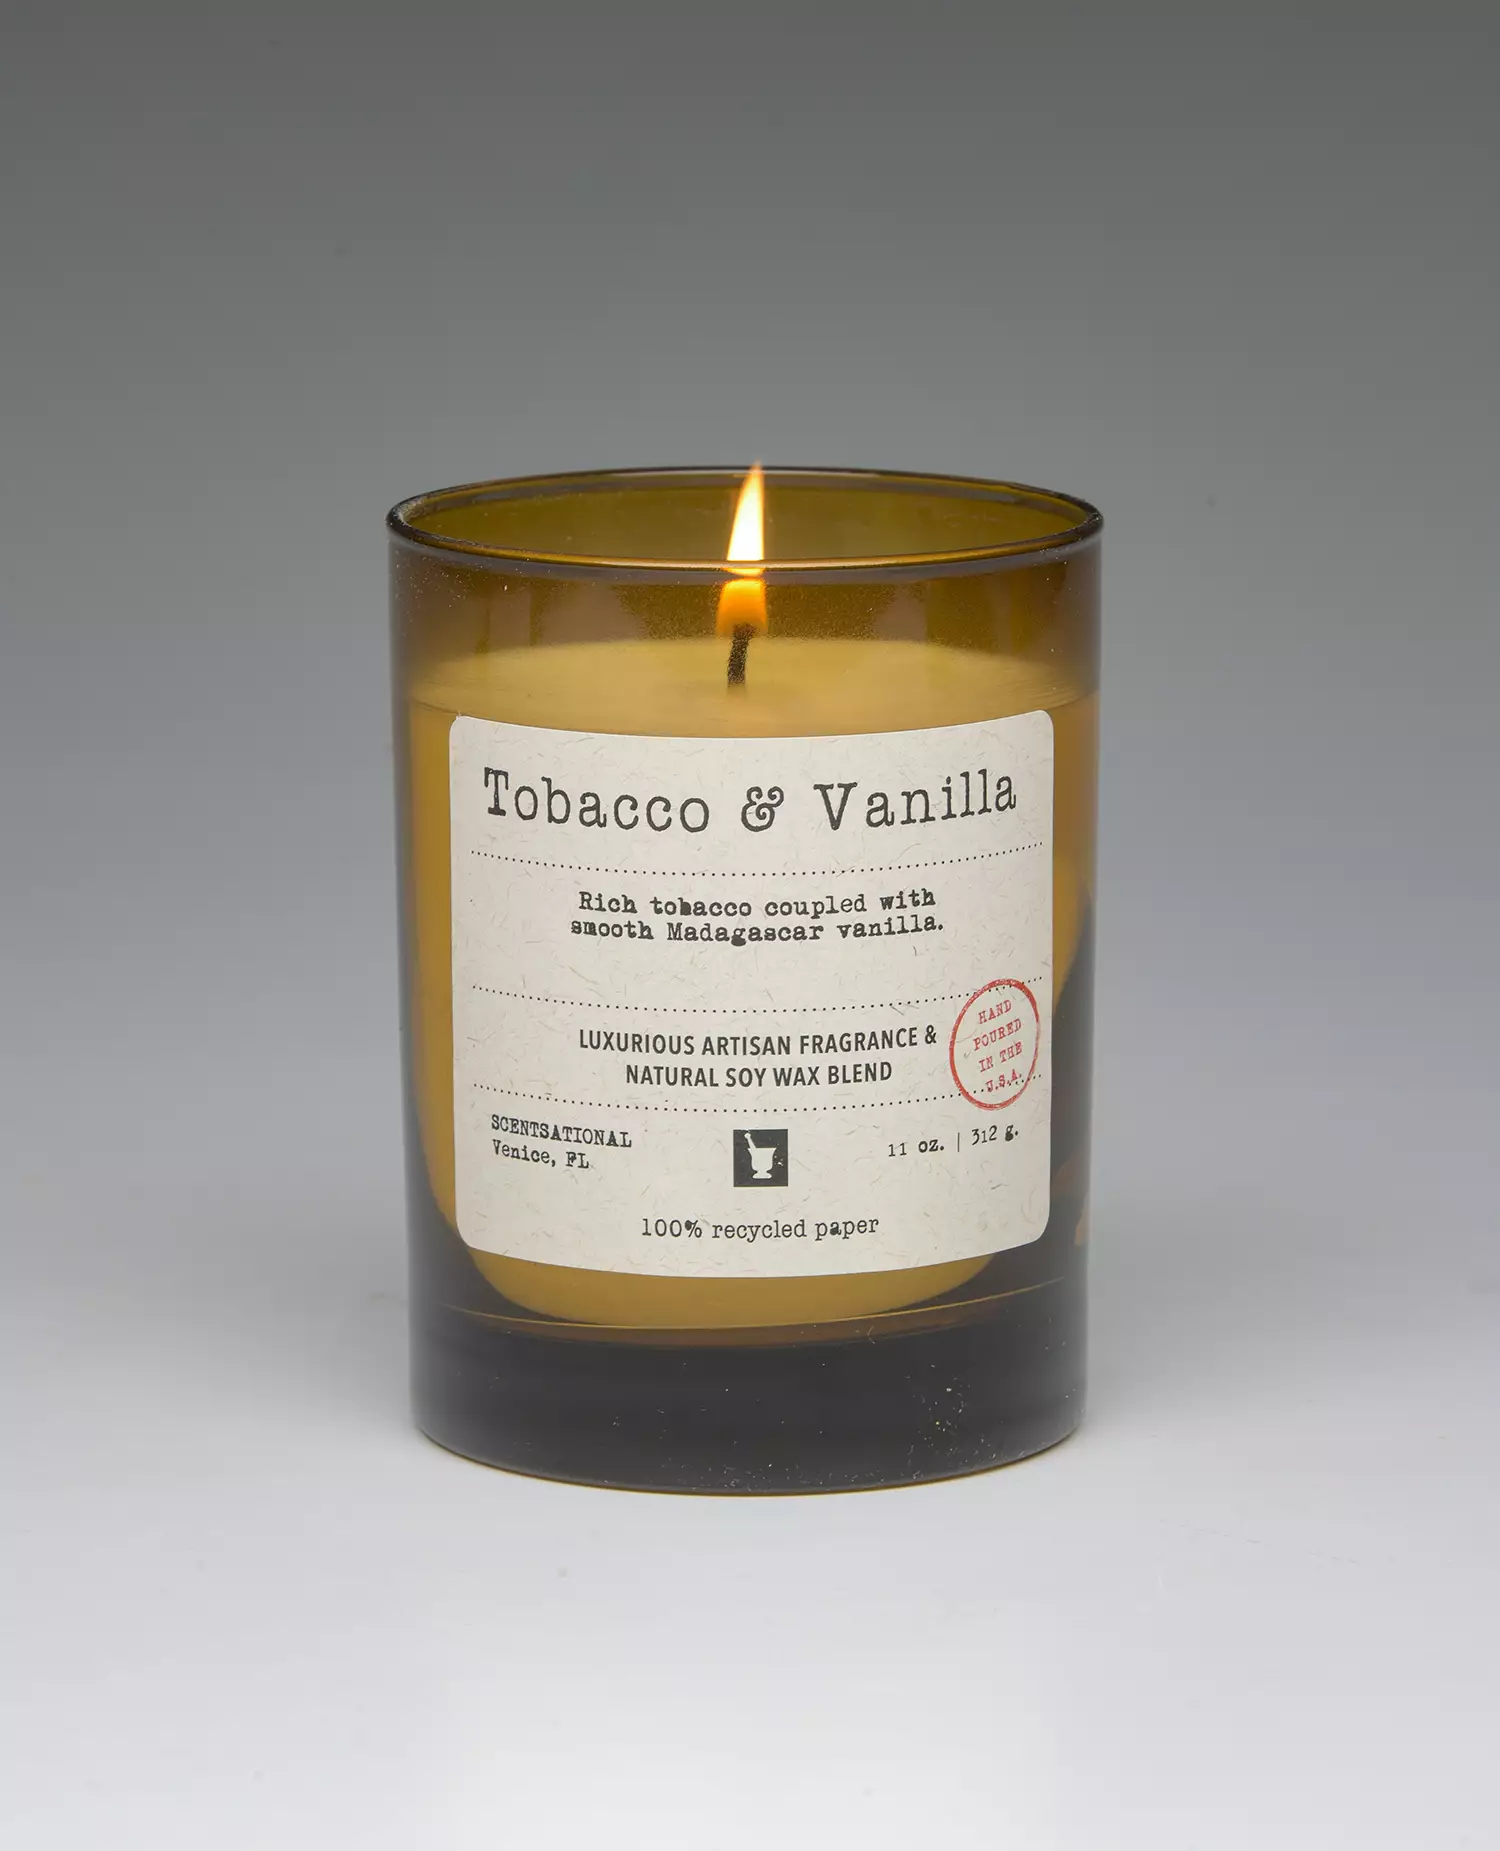 Tobacco & Vanilla – 11oz scented candle burning